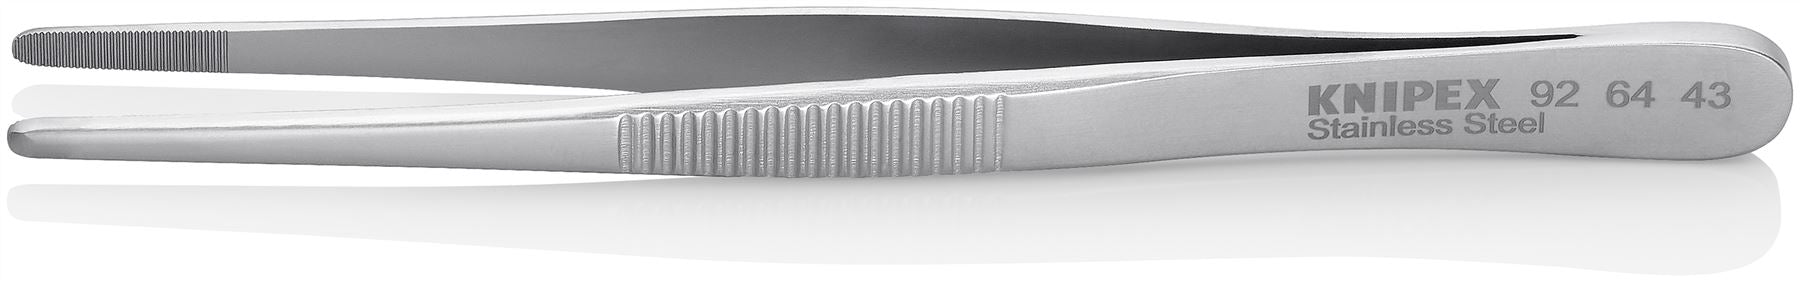 KNIPEX Universal Tweezers 120mm Blunt Tip Stainless Steel 92 64 43